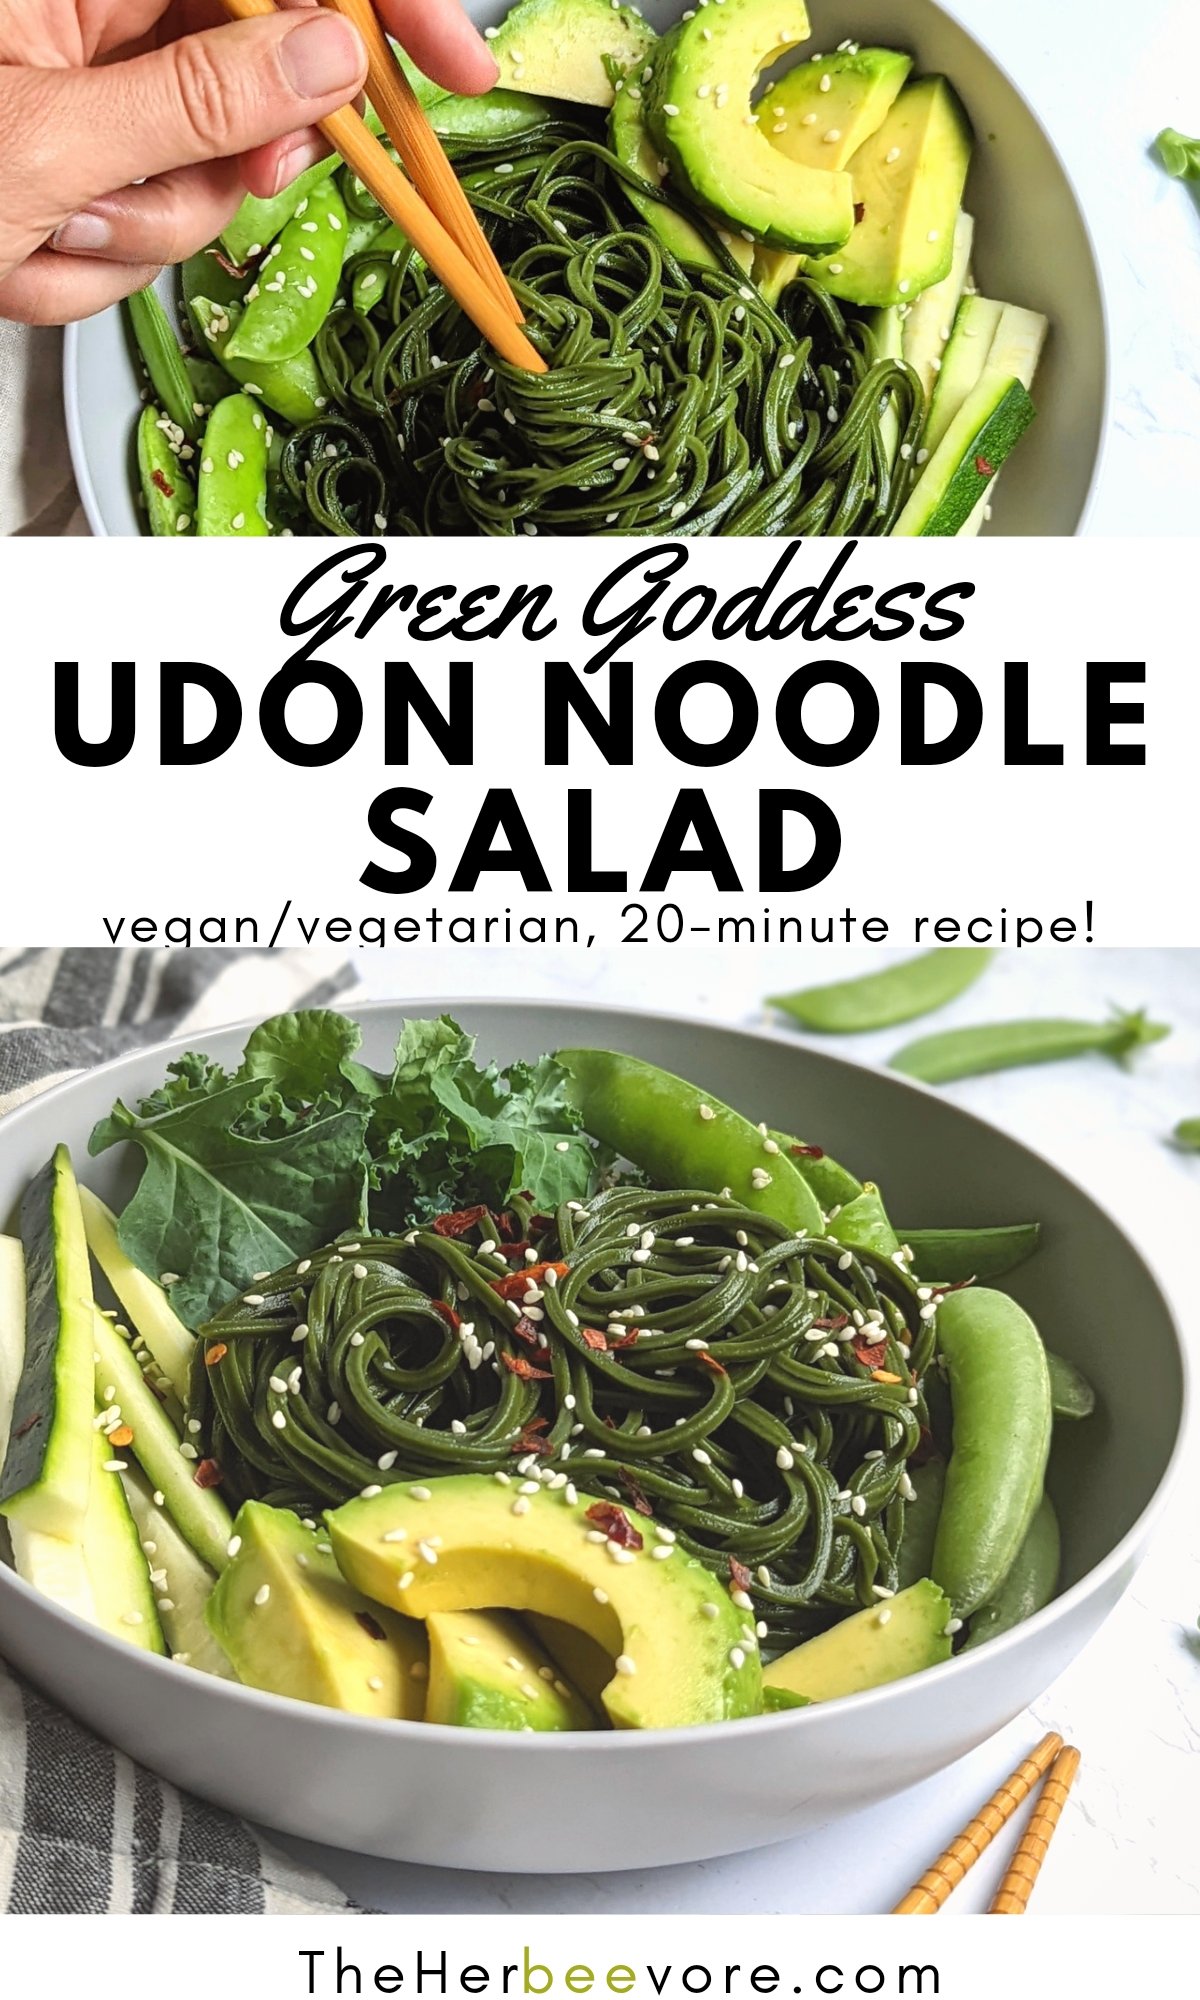 udon noodle salad recipe with avocado cucumber pea pods edamame and kale